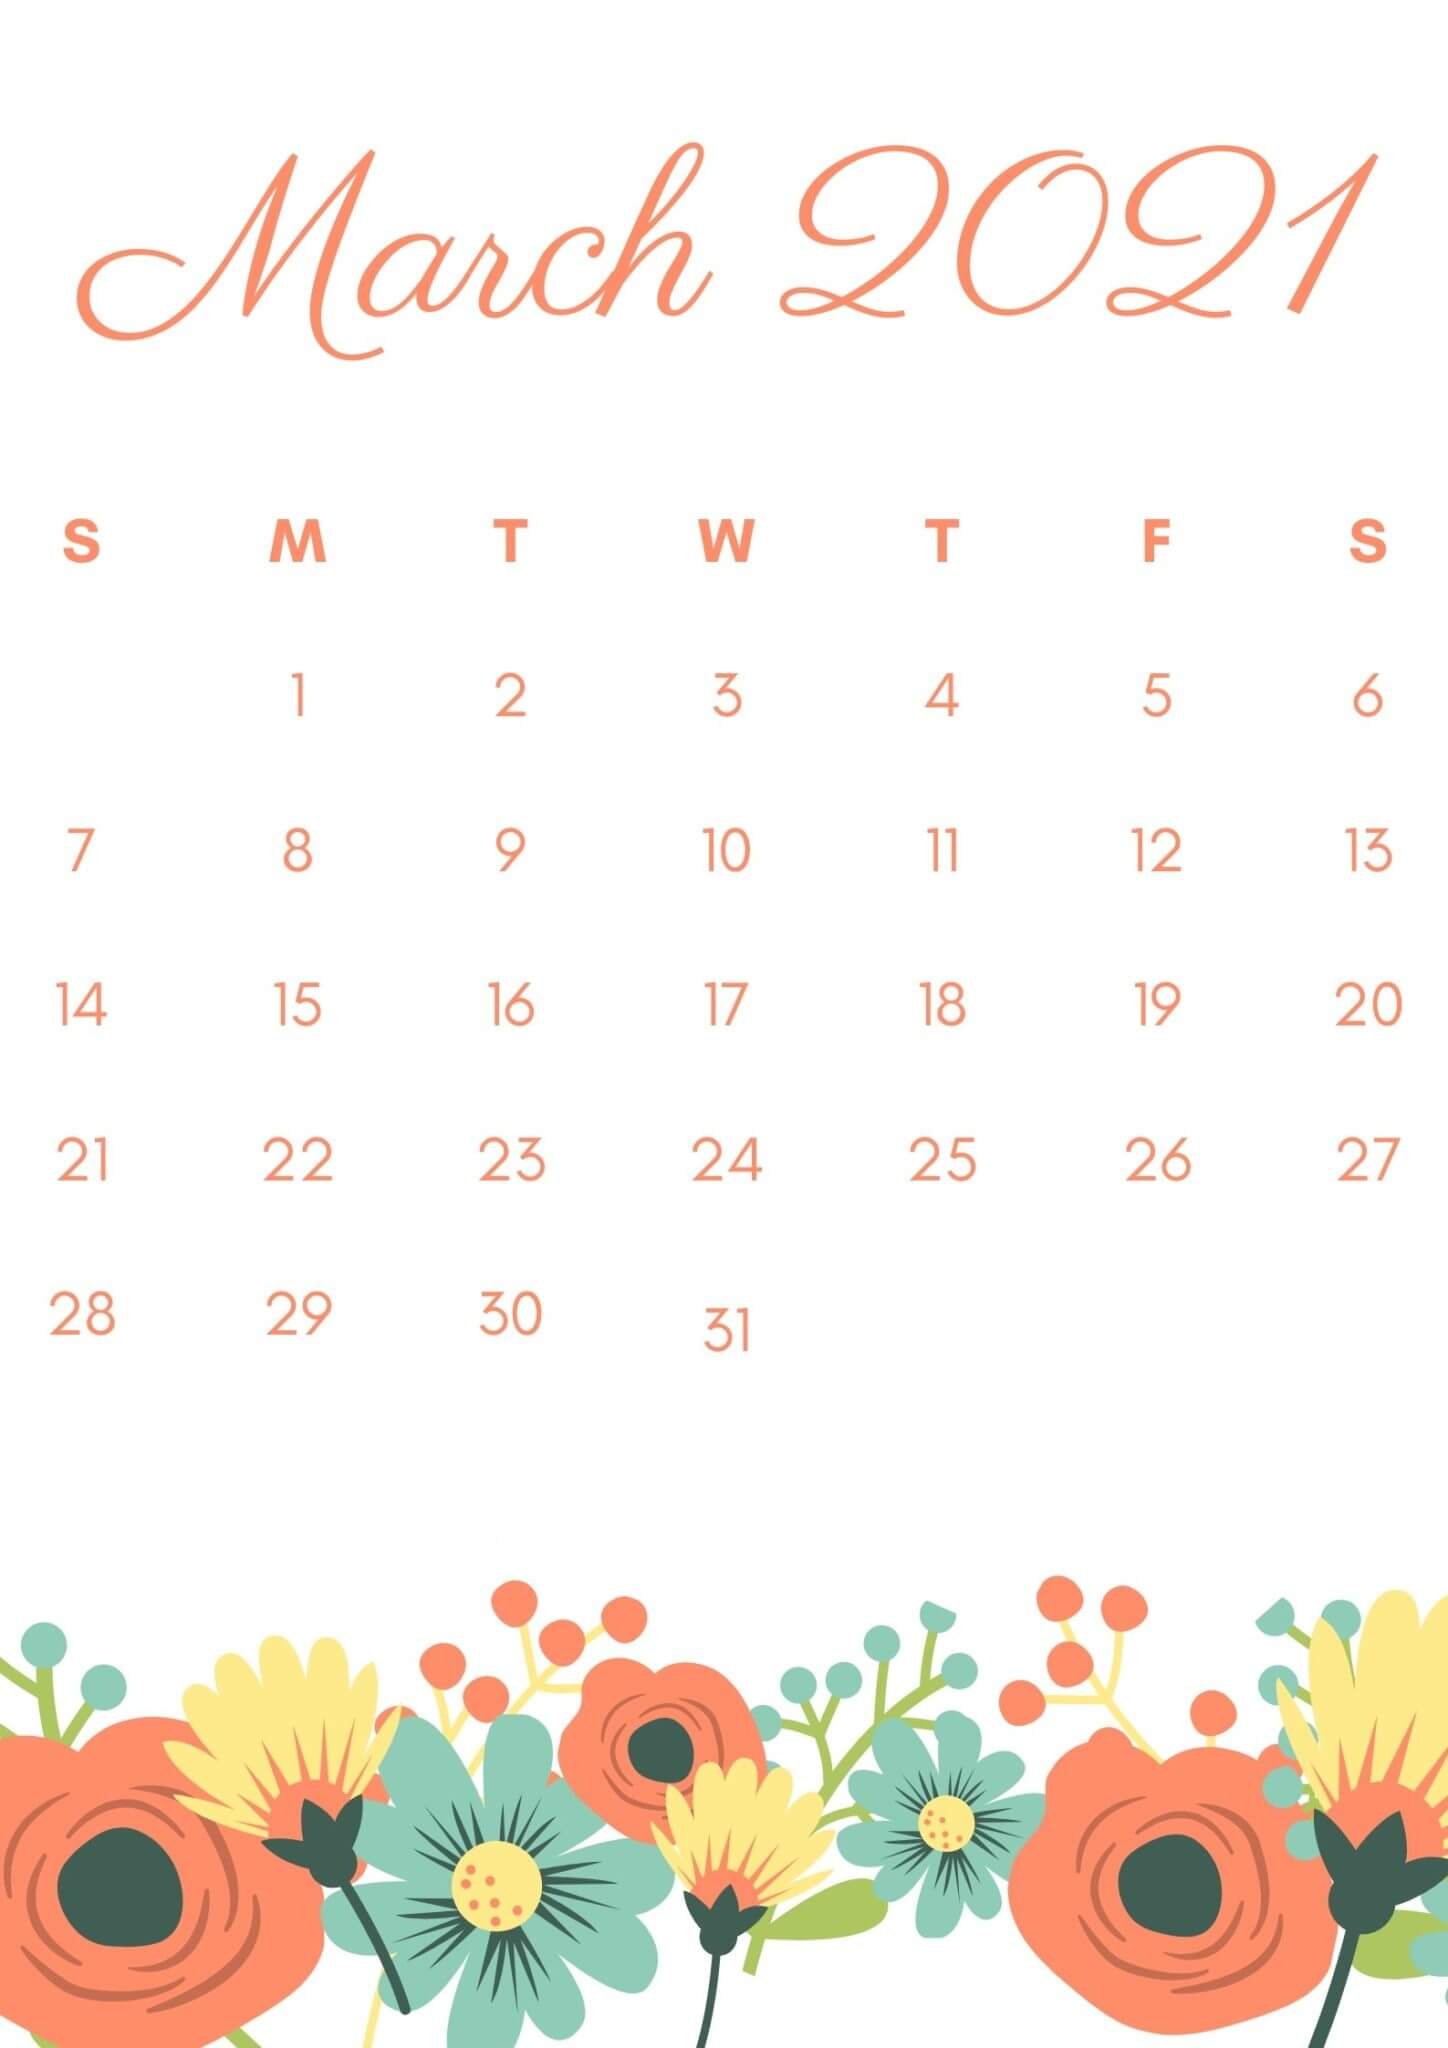 Decorative March 2021 Floral Calendar Wallpaper